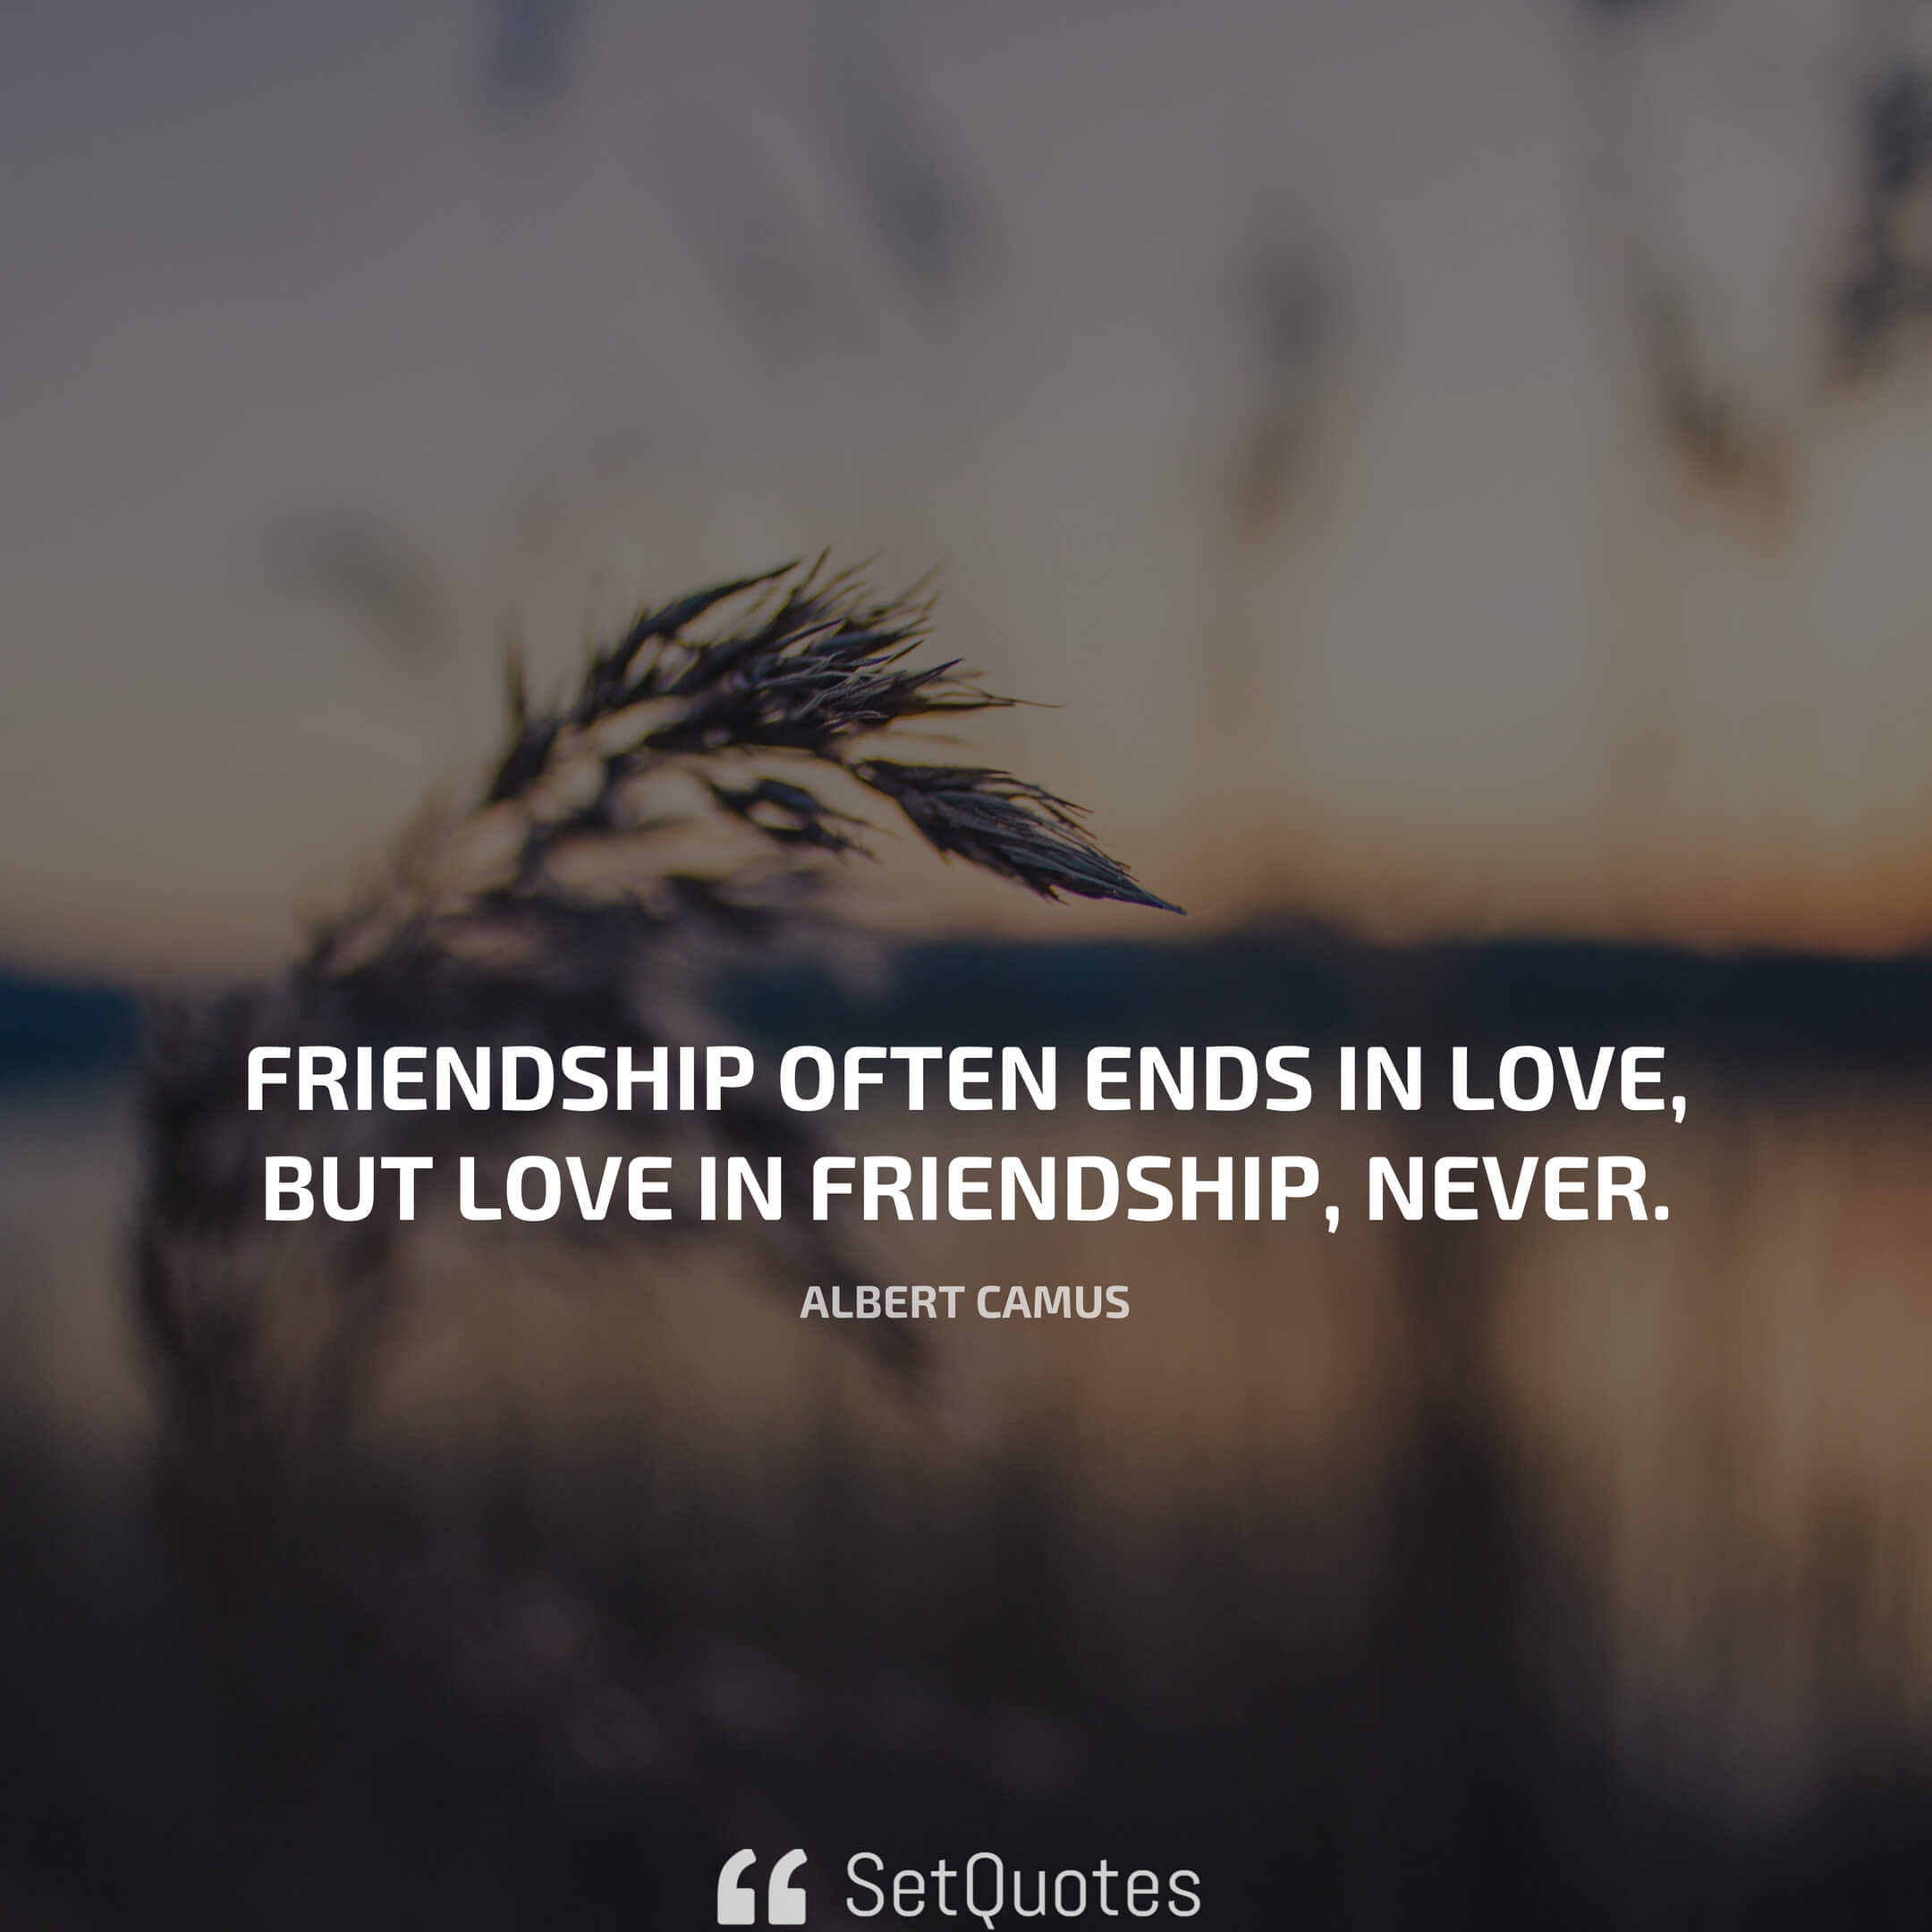 Friendship often ends in love, but love in friendship - never. - Albert Camus